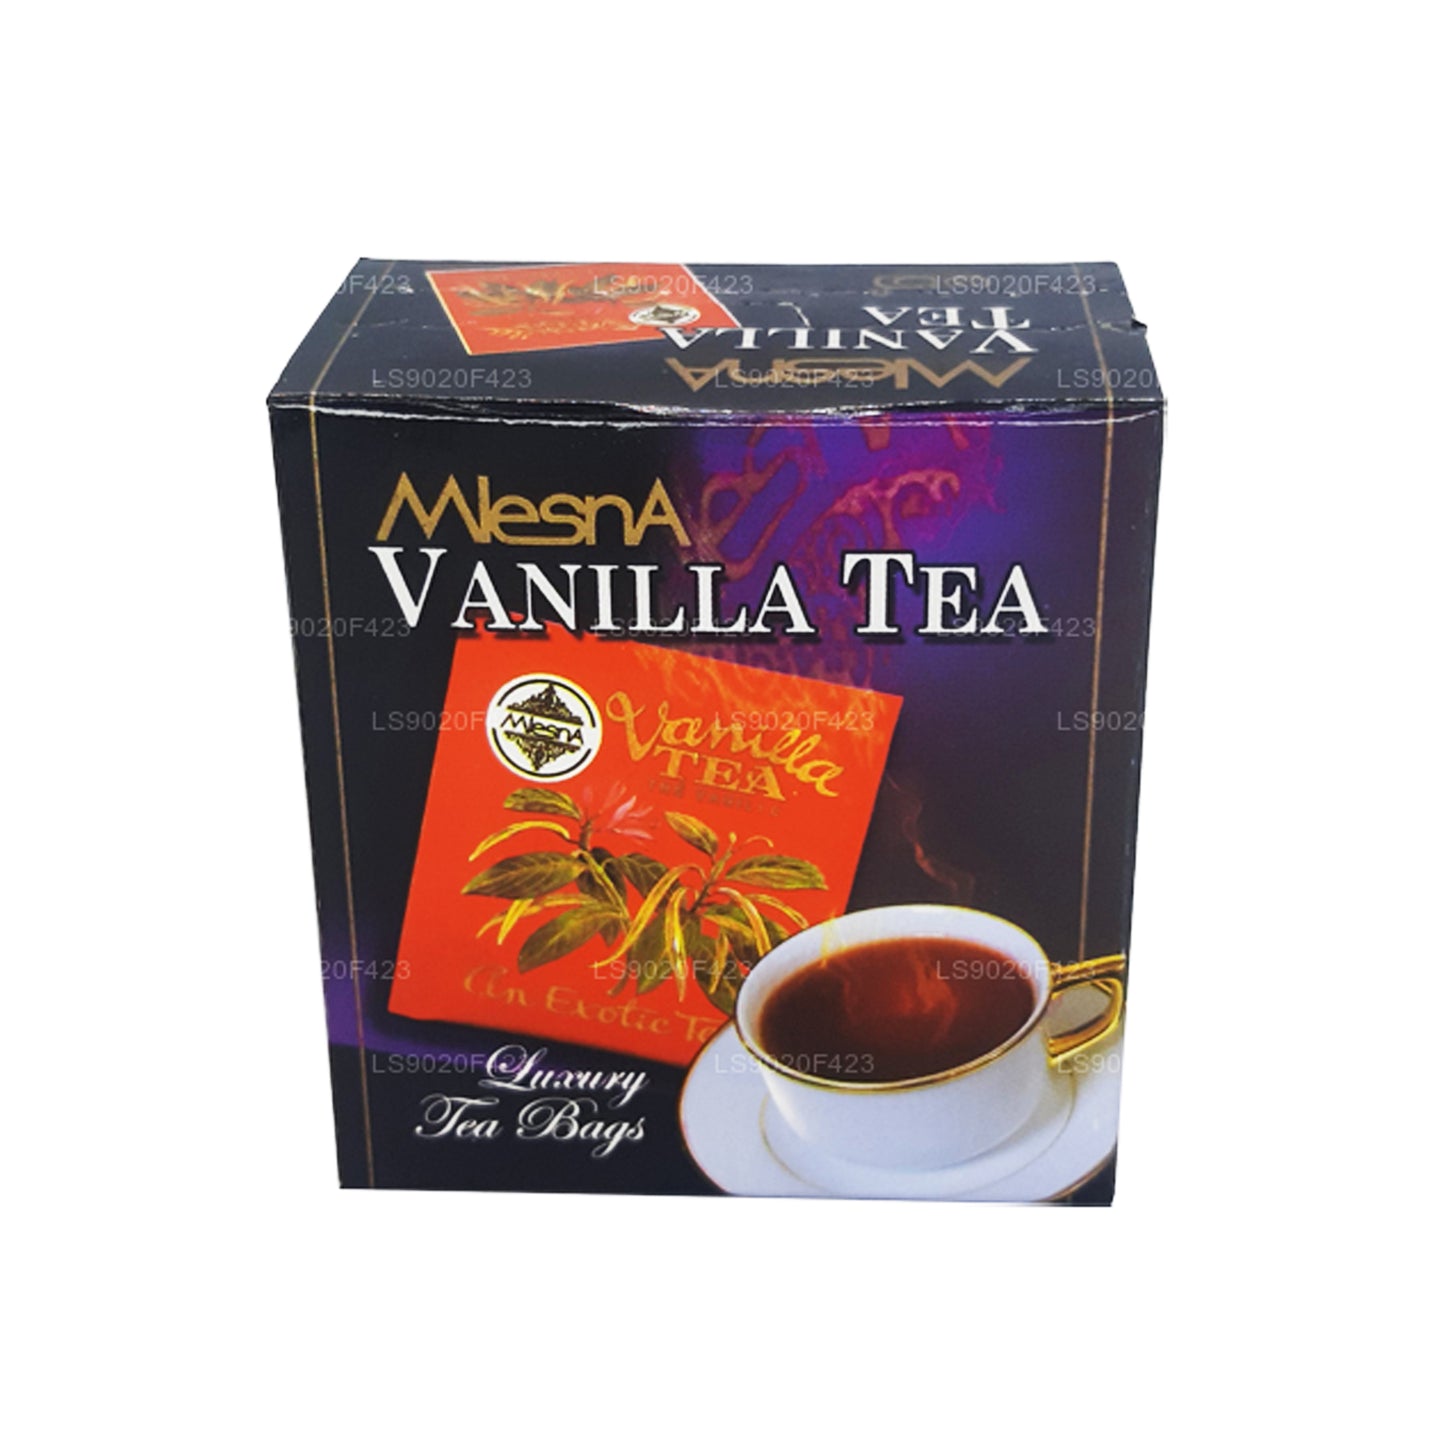 Mlesna 香草茶 (20g) 10 个豪华茶包